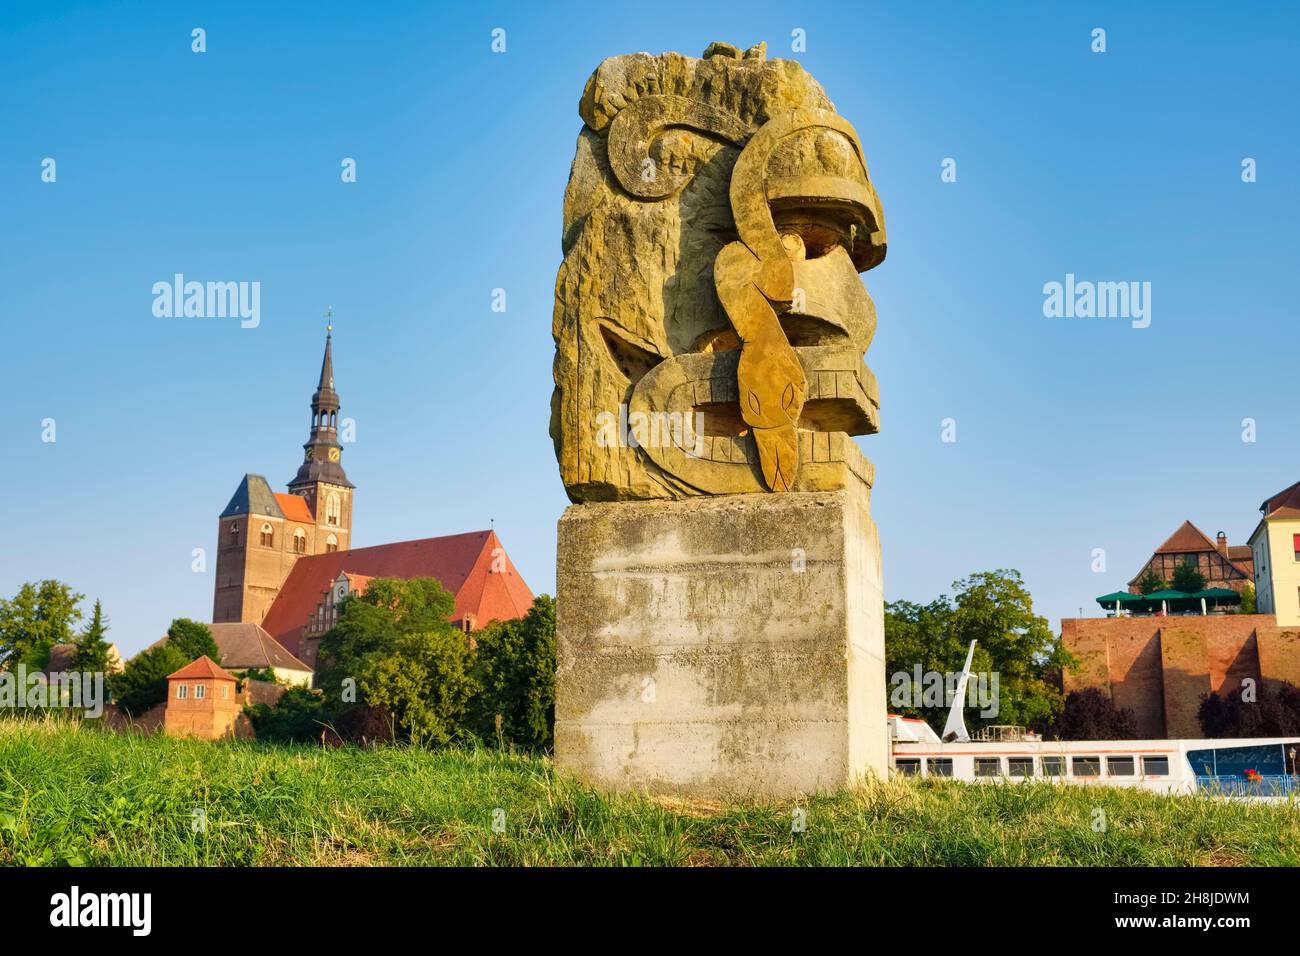 Sculpture at River Elbe, Tangermünde, Saxony-Anhalt, Germany Stock Photo